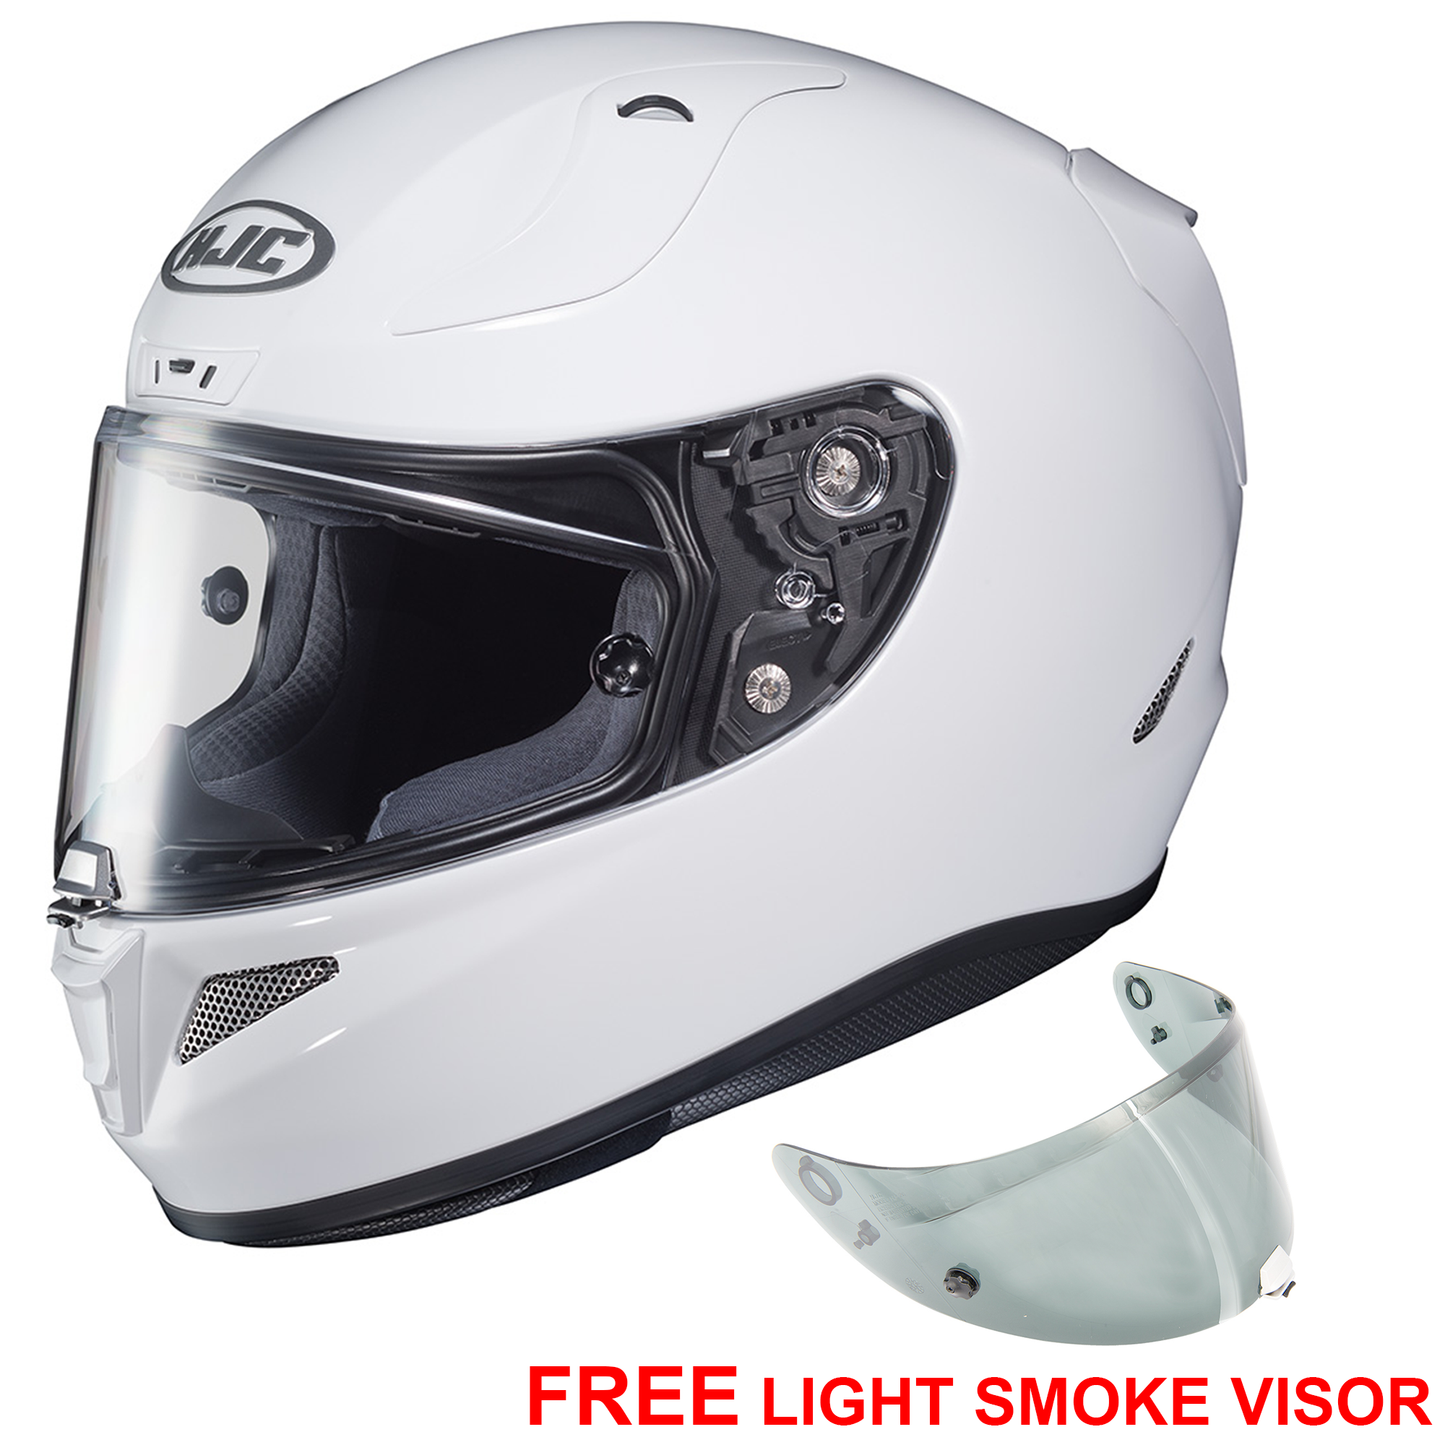 HJC RPHA 11 - Pearl White - Includes Free Light Smoke Visor